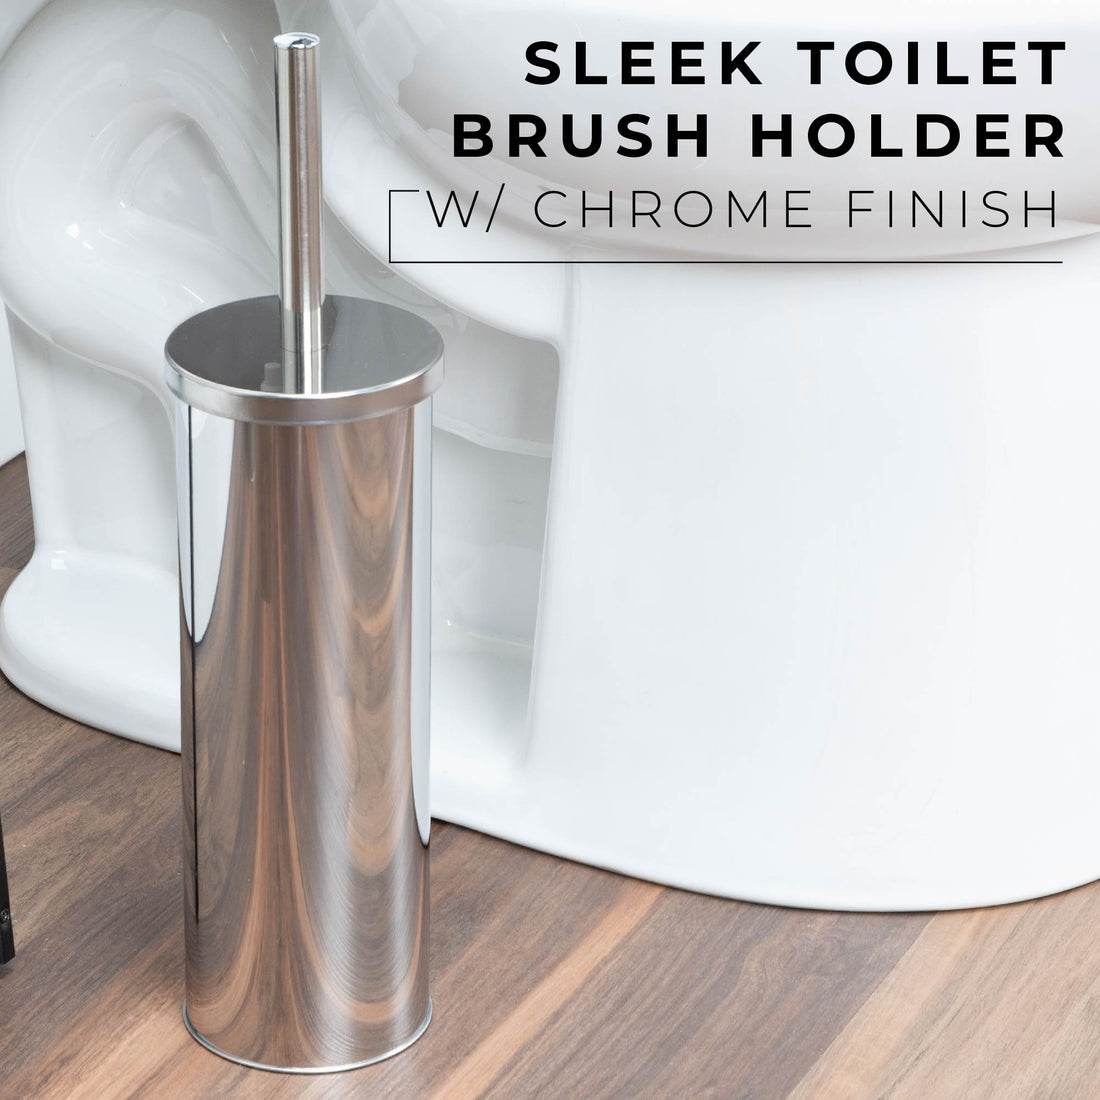 Toilet Brush and Holder (Chrome Finish) - Utility sinks vanites Tehila